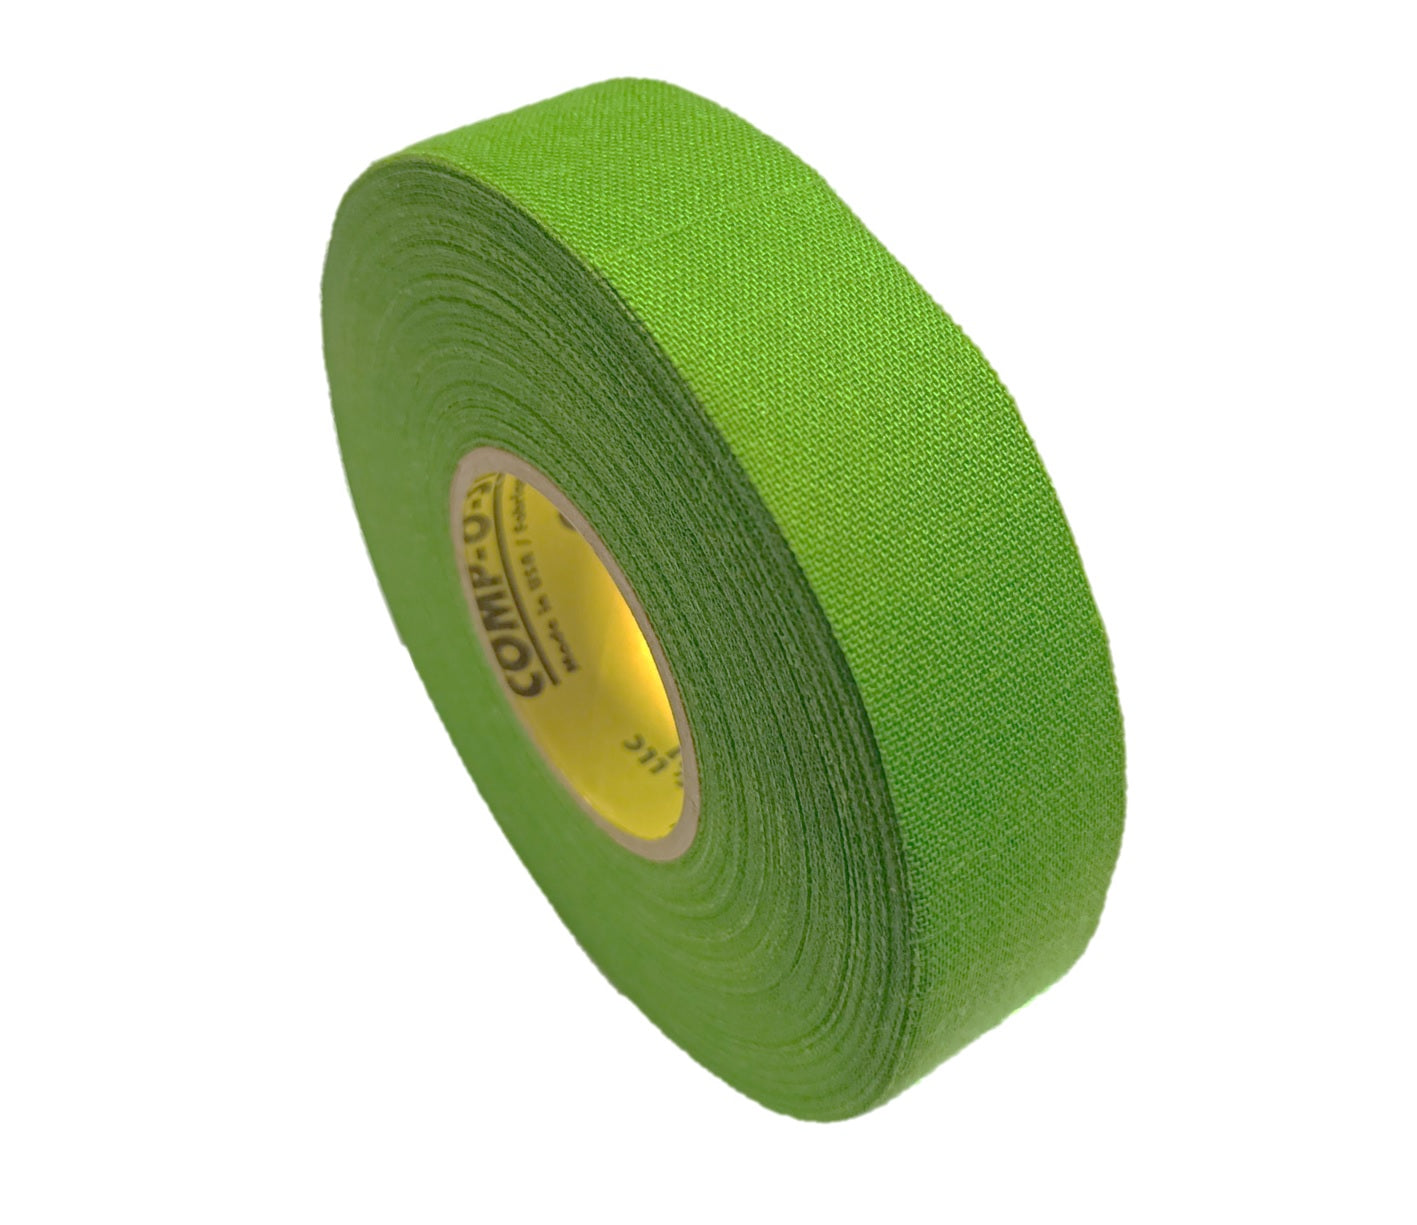 North American Racket Tape 27m x 24mm green